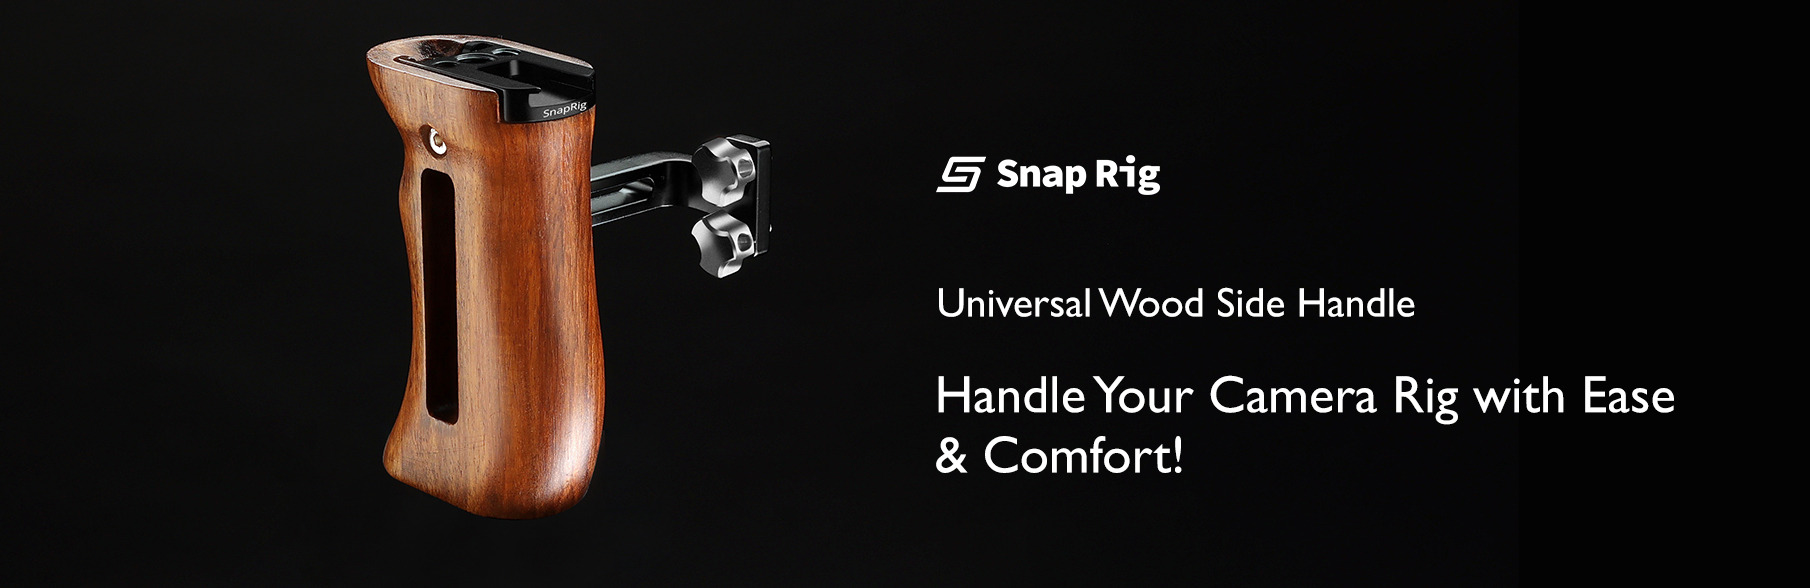 Proaim-SnapRig-Universal-Wood-Side-Handle-WSH255